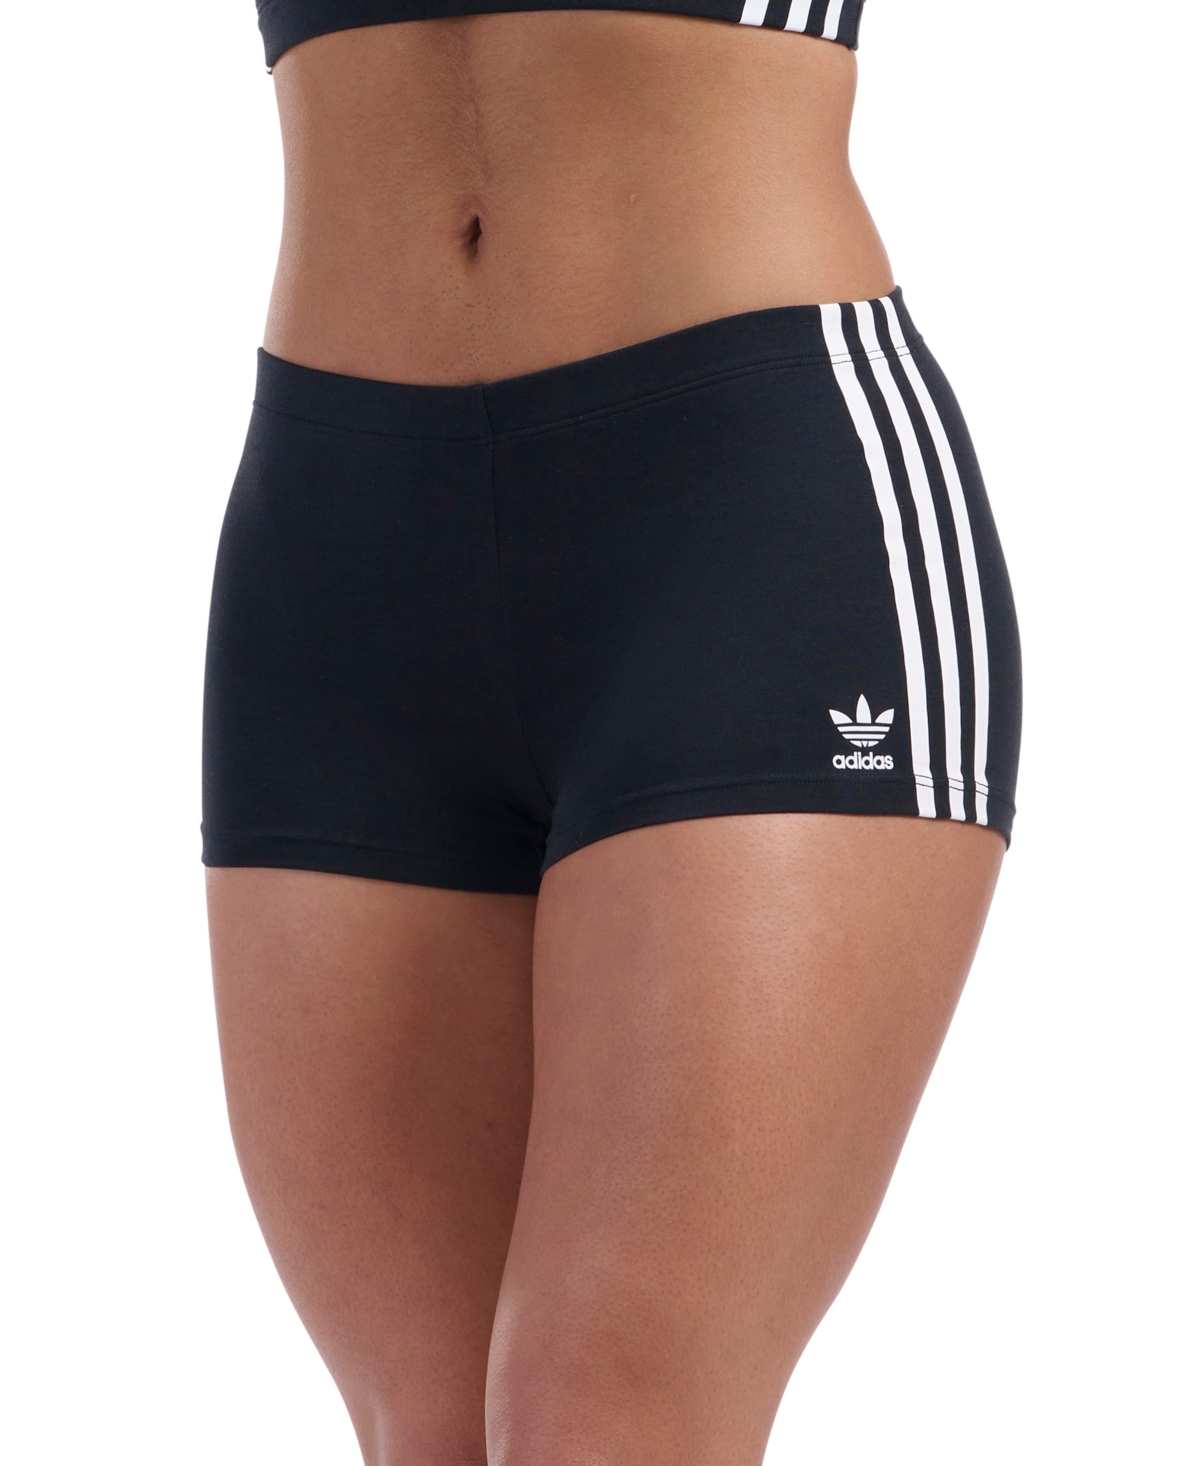 Adidas Originals Intimates Women's Adicolor Comfort Flex Shorts Underwear 4a3h00 In Black